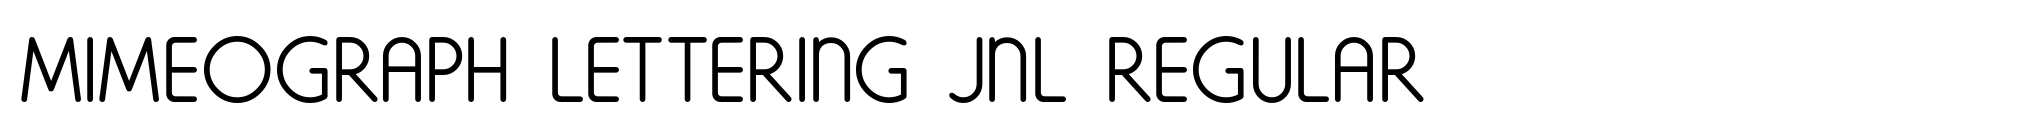 Mimeograph Lettering JNL Regular image